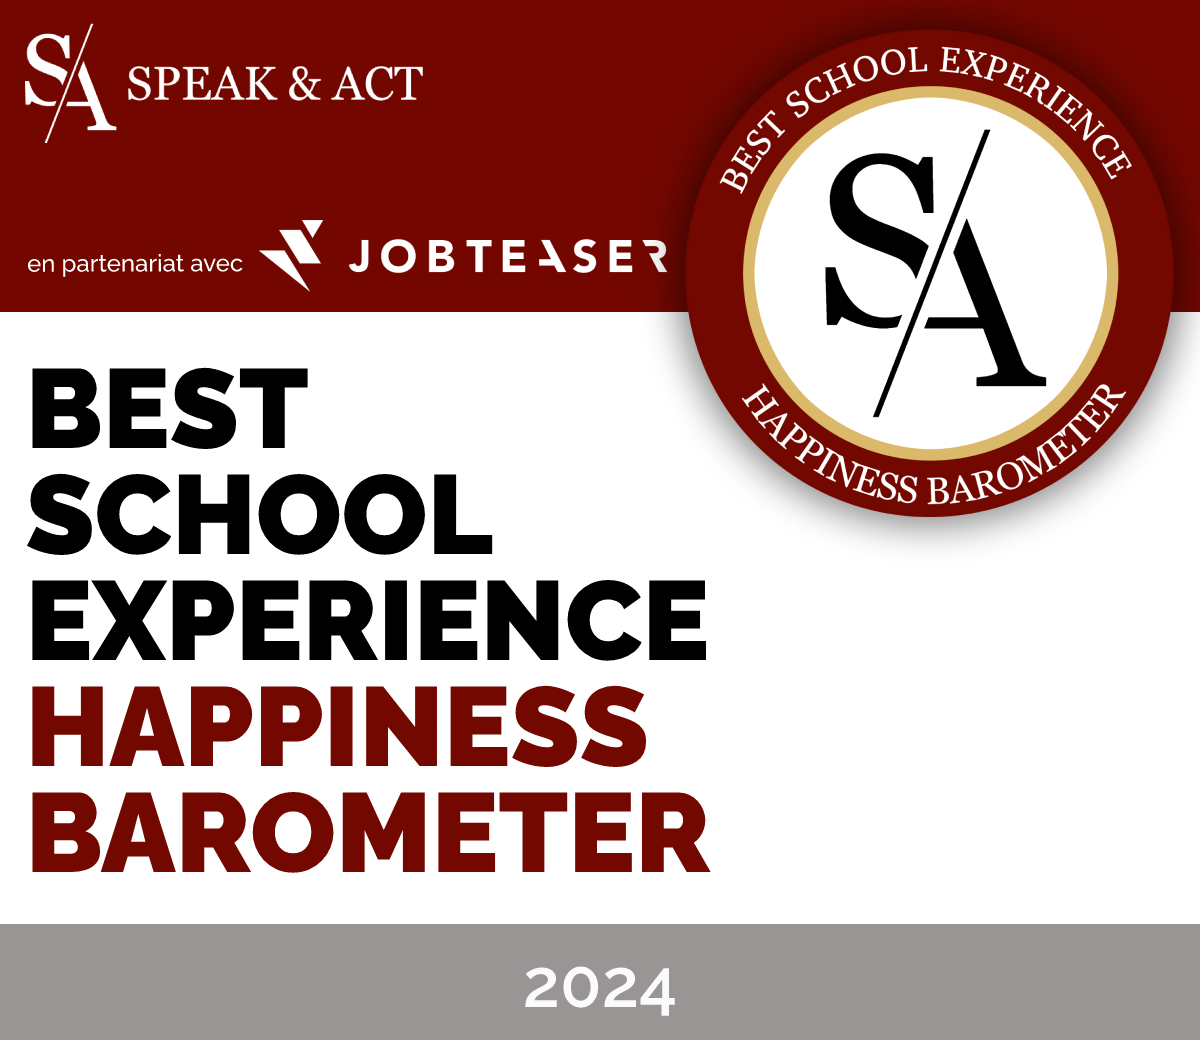 ESIGELEC, labellisée Best School Experience 2024 par Speak & Act